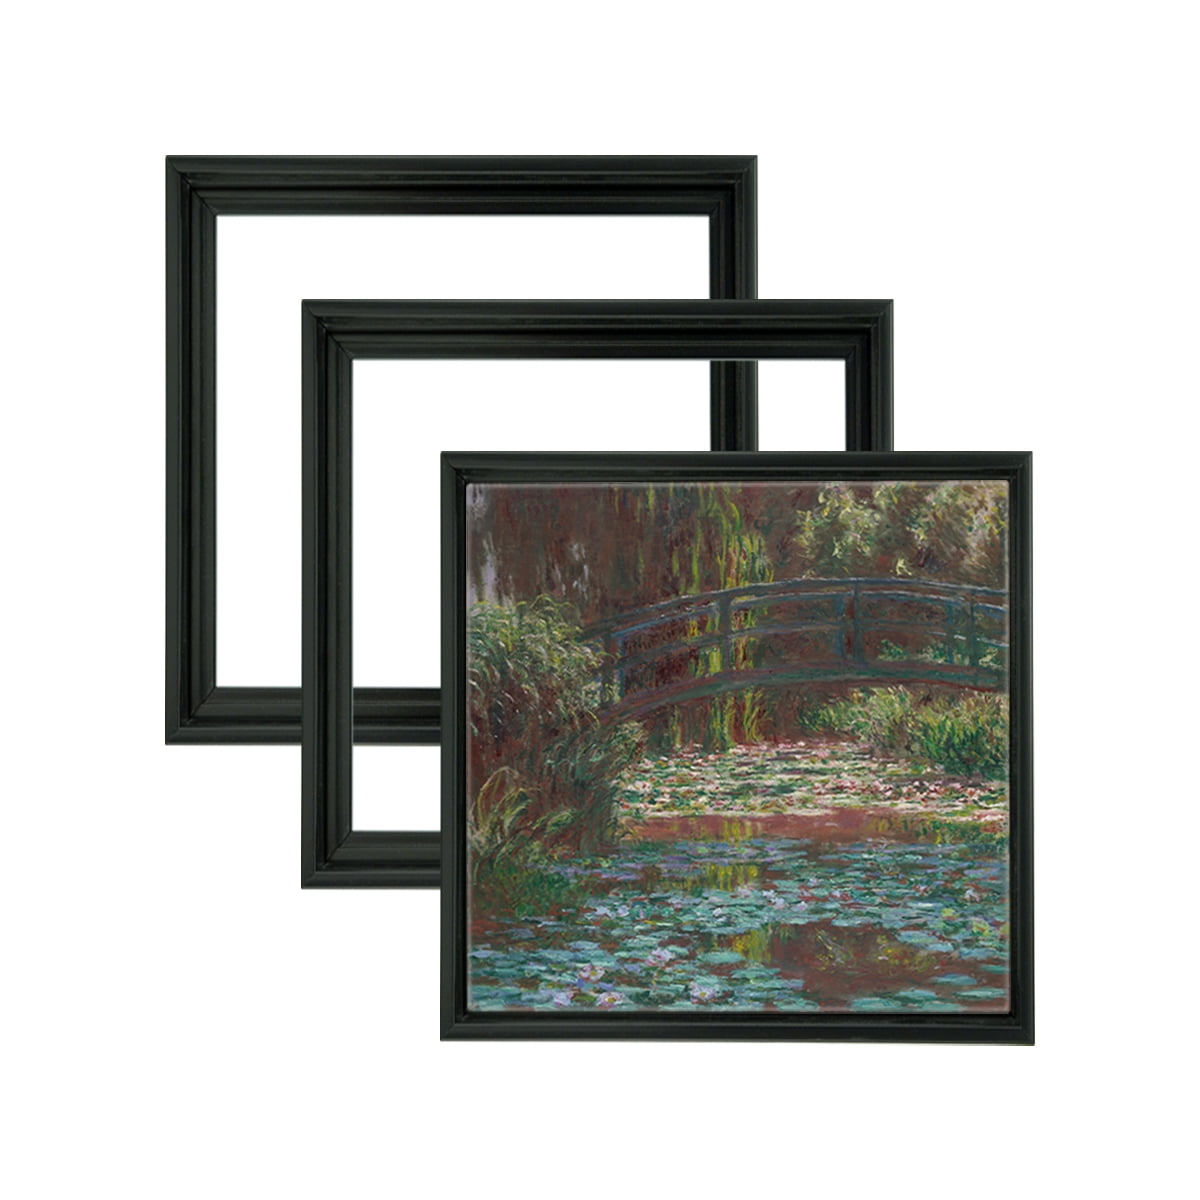 Float frame for 4x4 x 3/4  panel